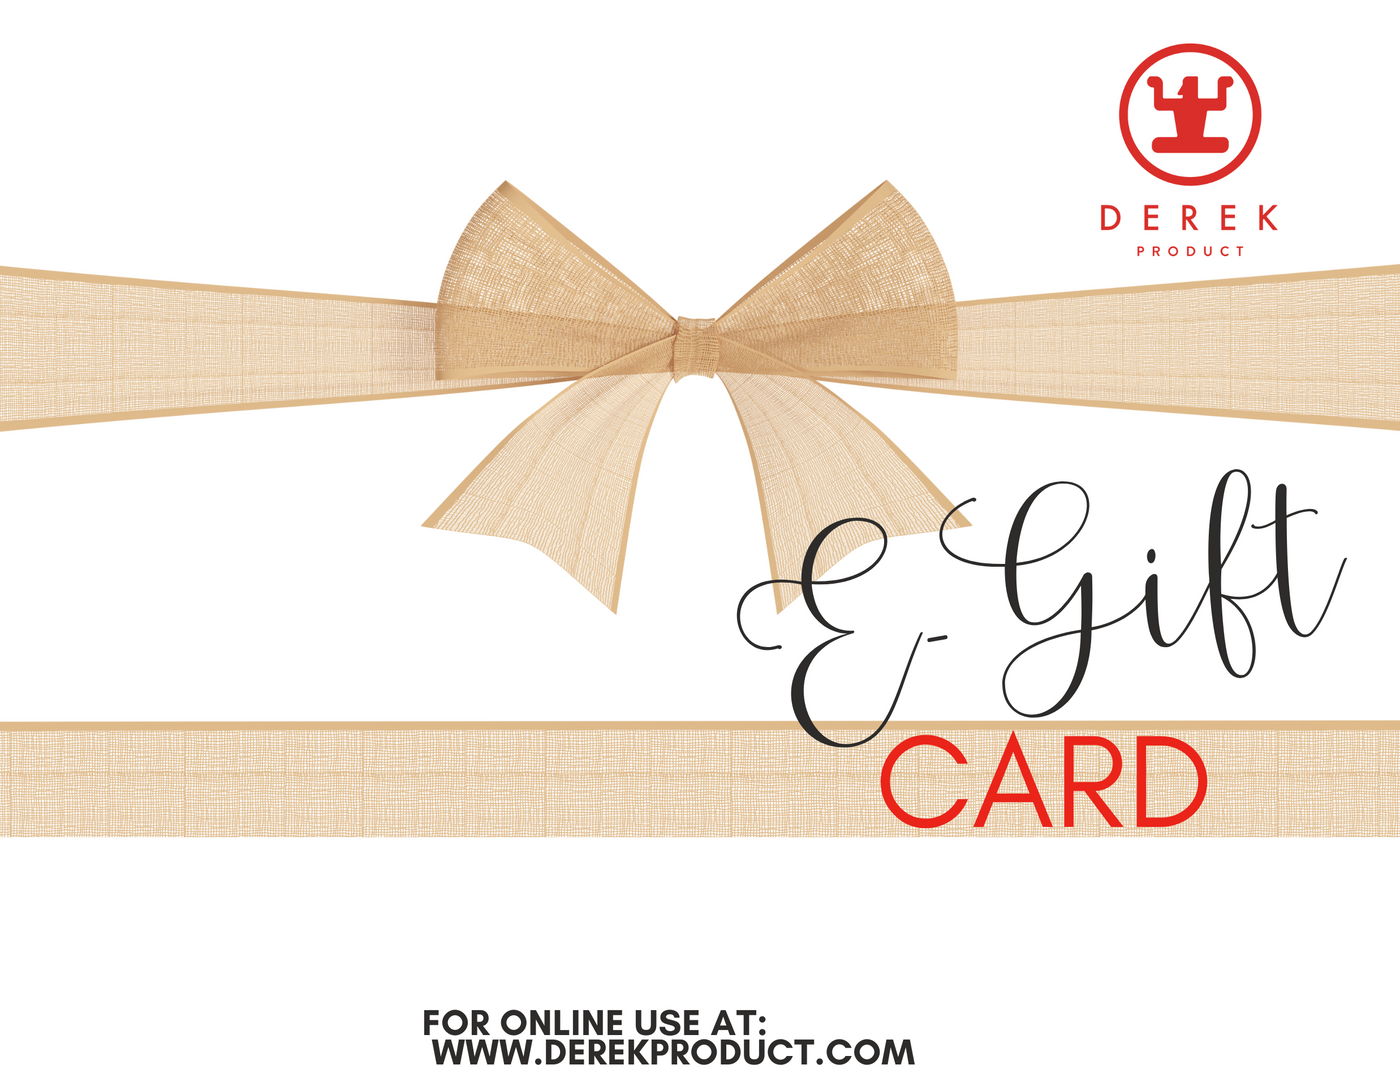 Derek Product Gift Card - DerekProduct